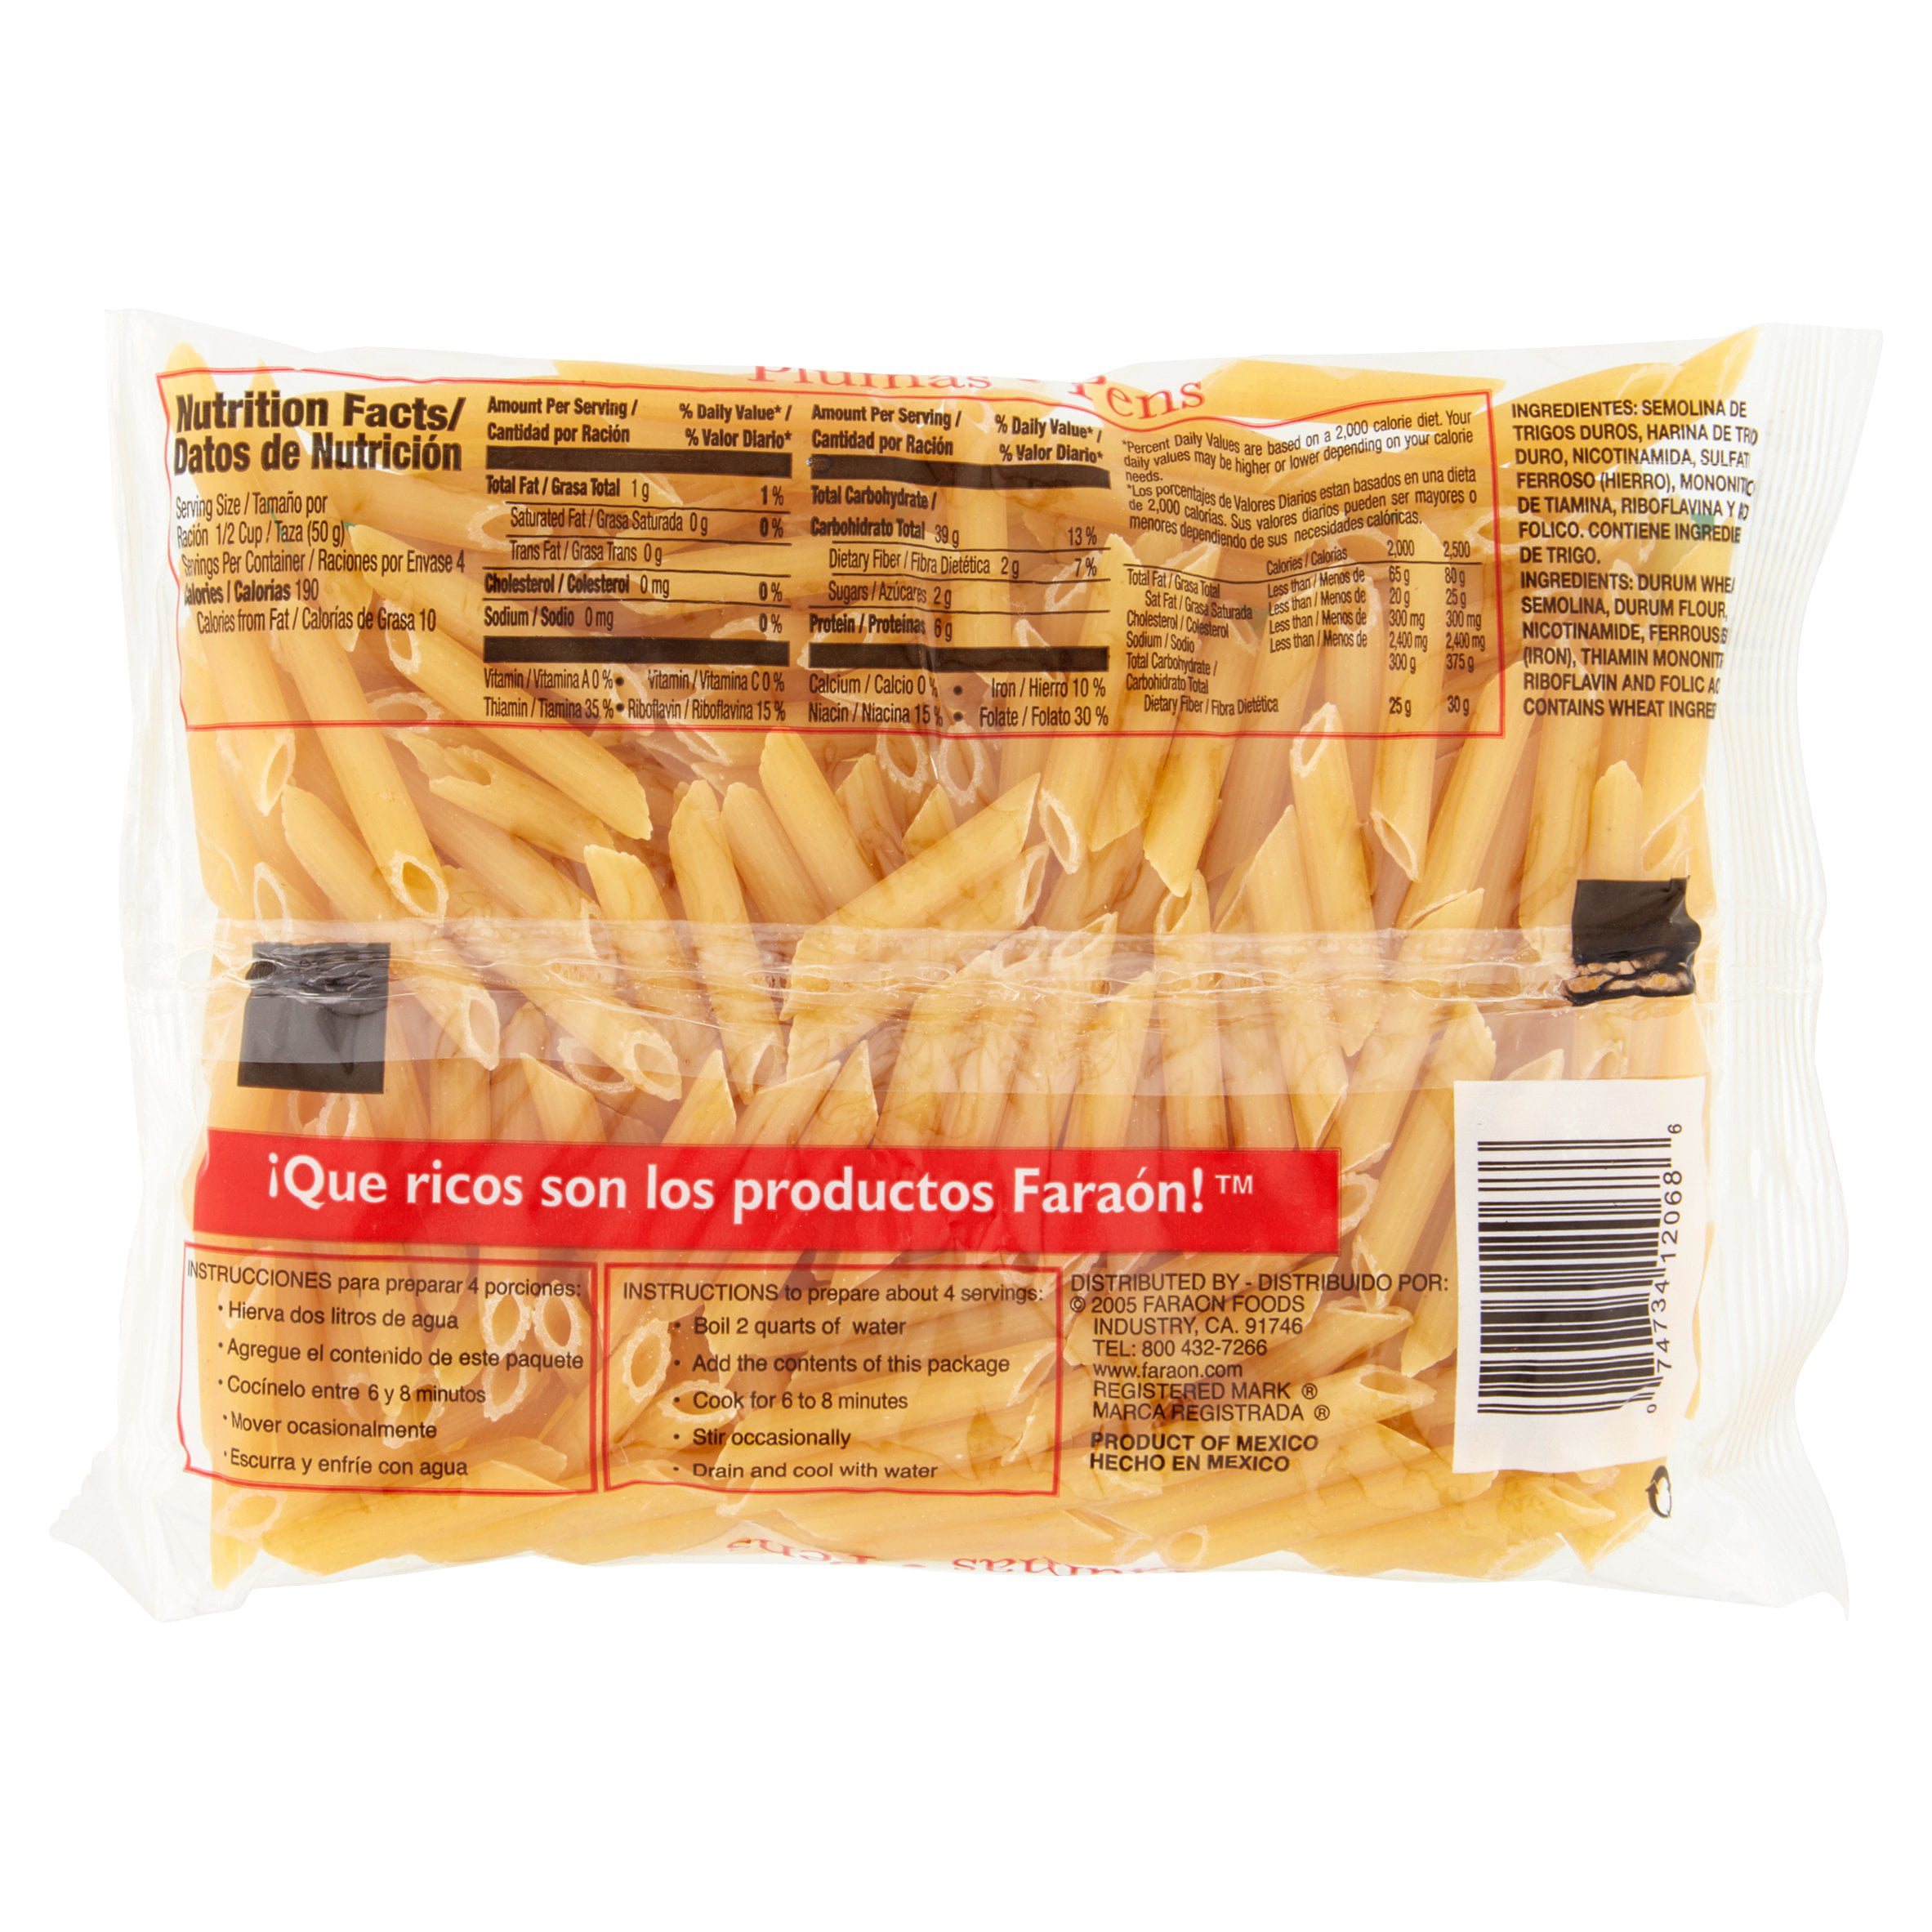 Buy FARAON Pasta Plumas Pens - 9.8 Fluid Ounces Online